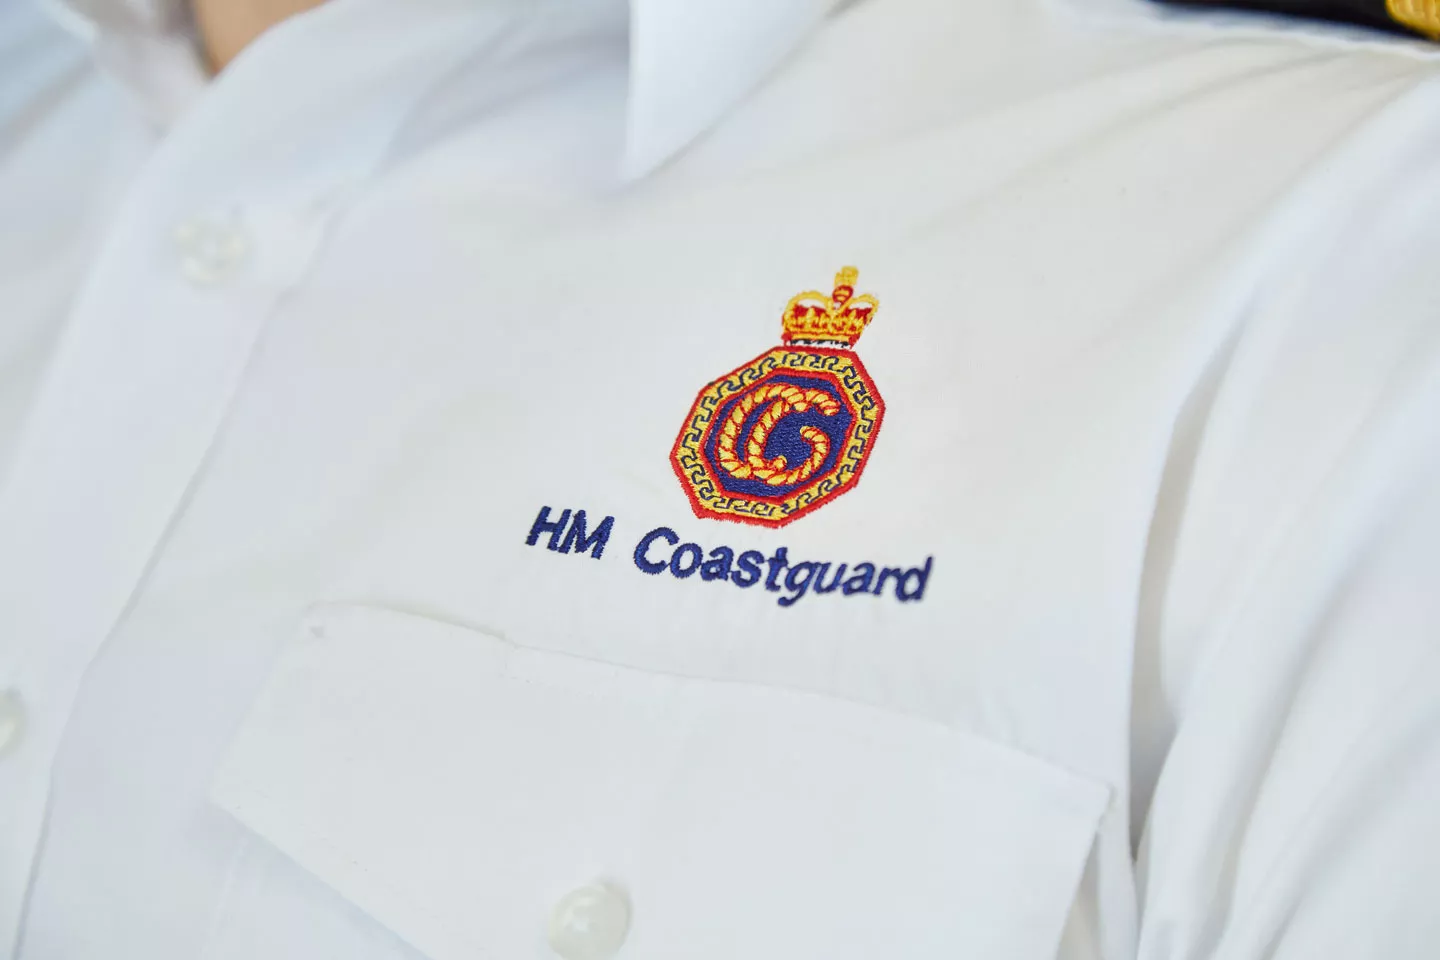 Coastguard crest on a white uniform shirt